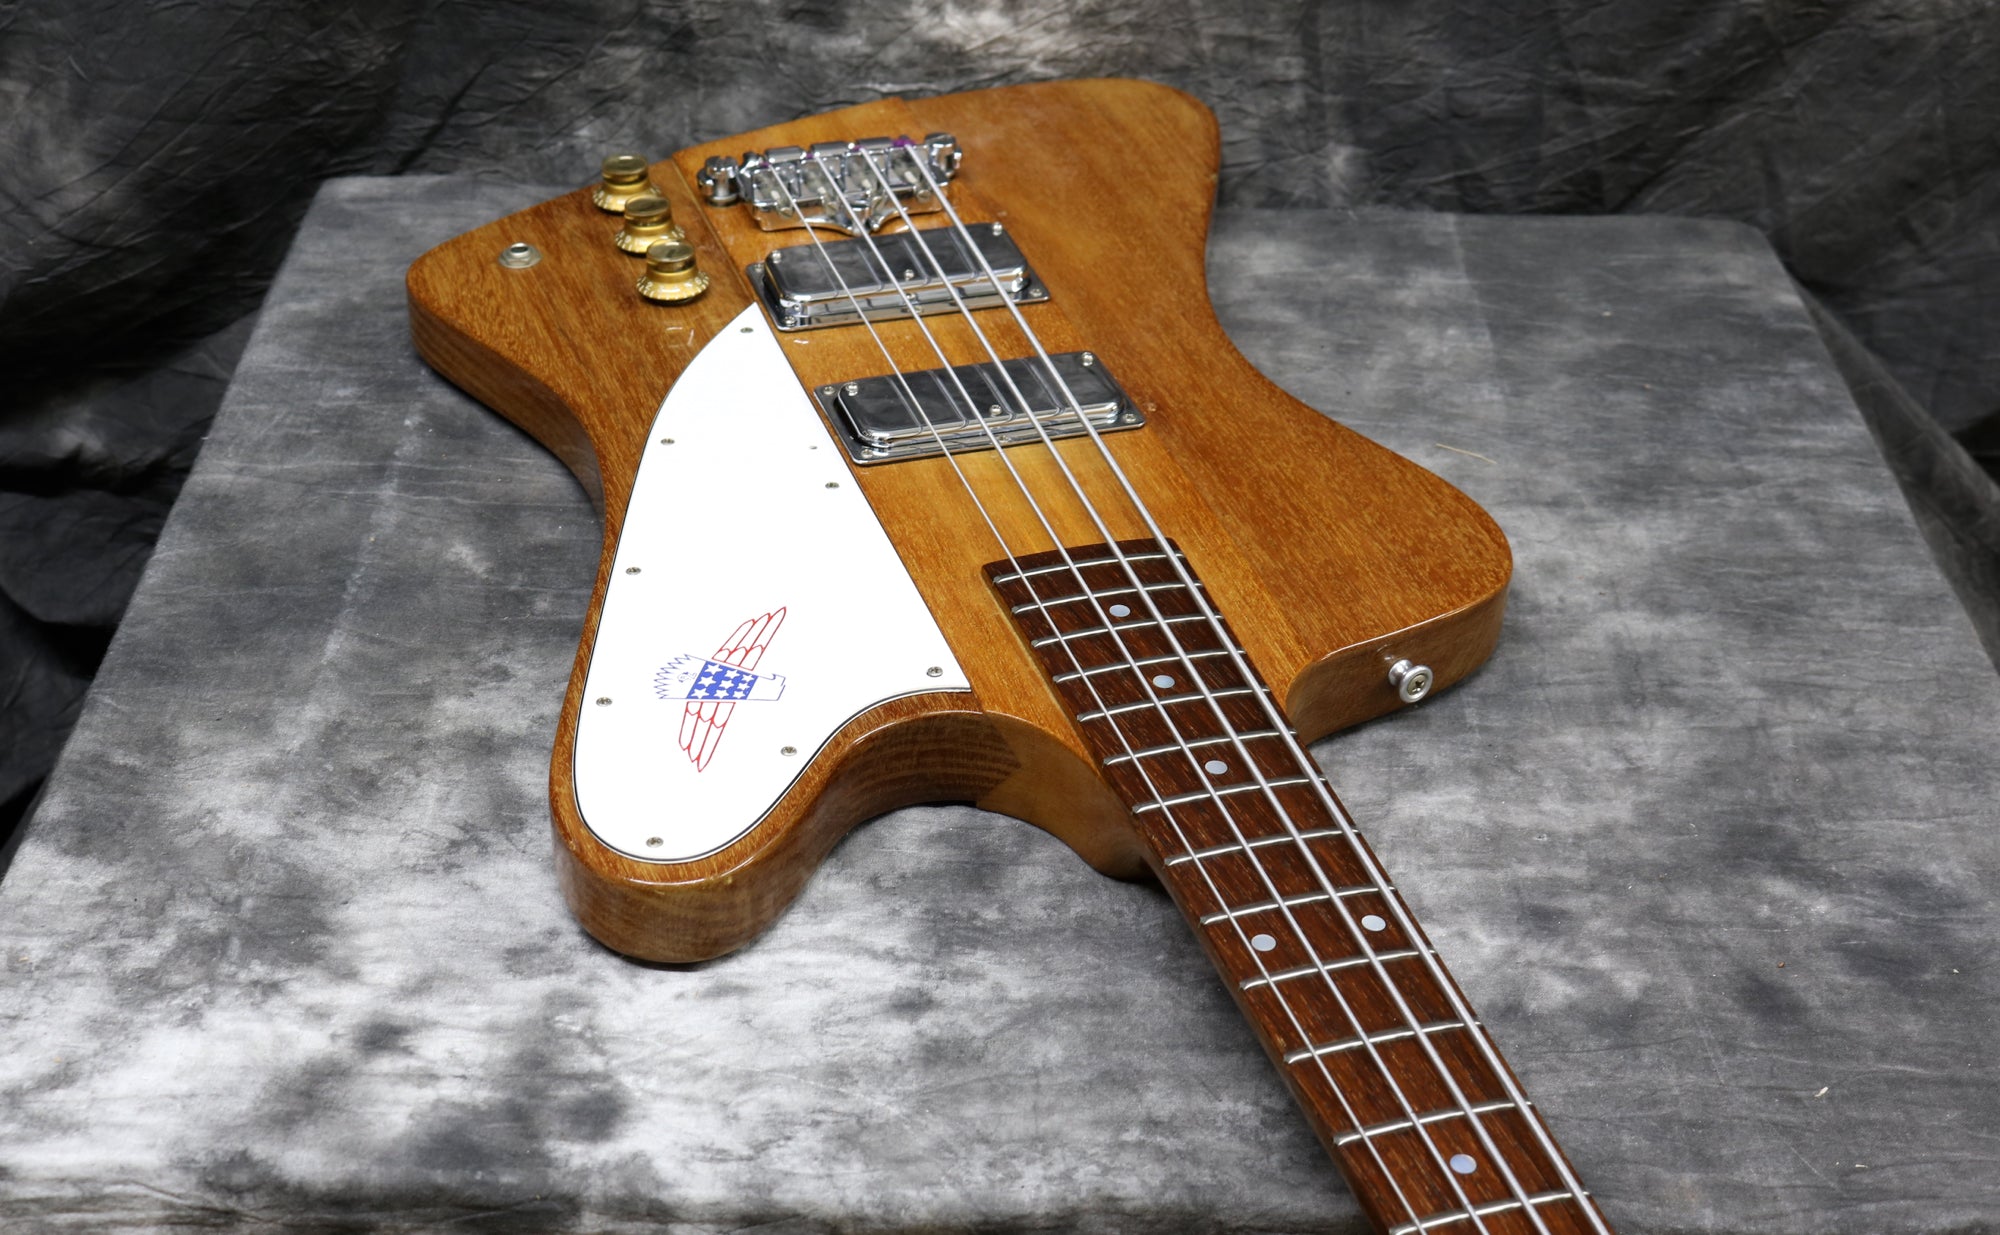 1976 gibson thunderbird bass